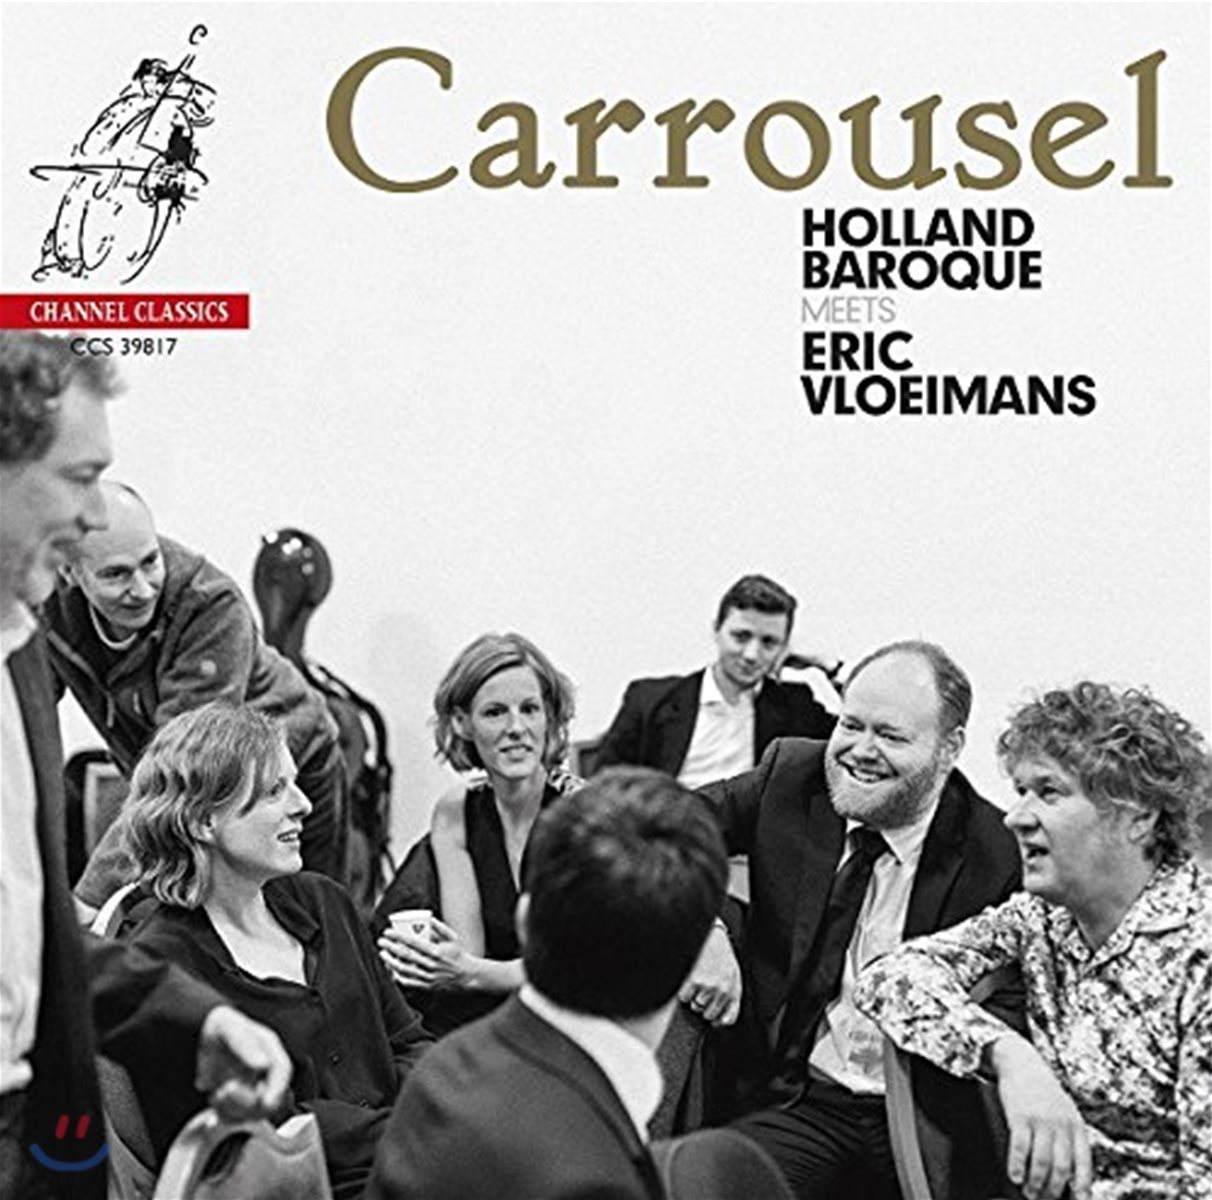 Holland Baroque 카루셀 - 에릭 블로이만스 / 바흐 / 북스테후데의 작품집 (Carrousel - Holland Baroque Meets Eric Vloeimans)